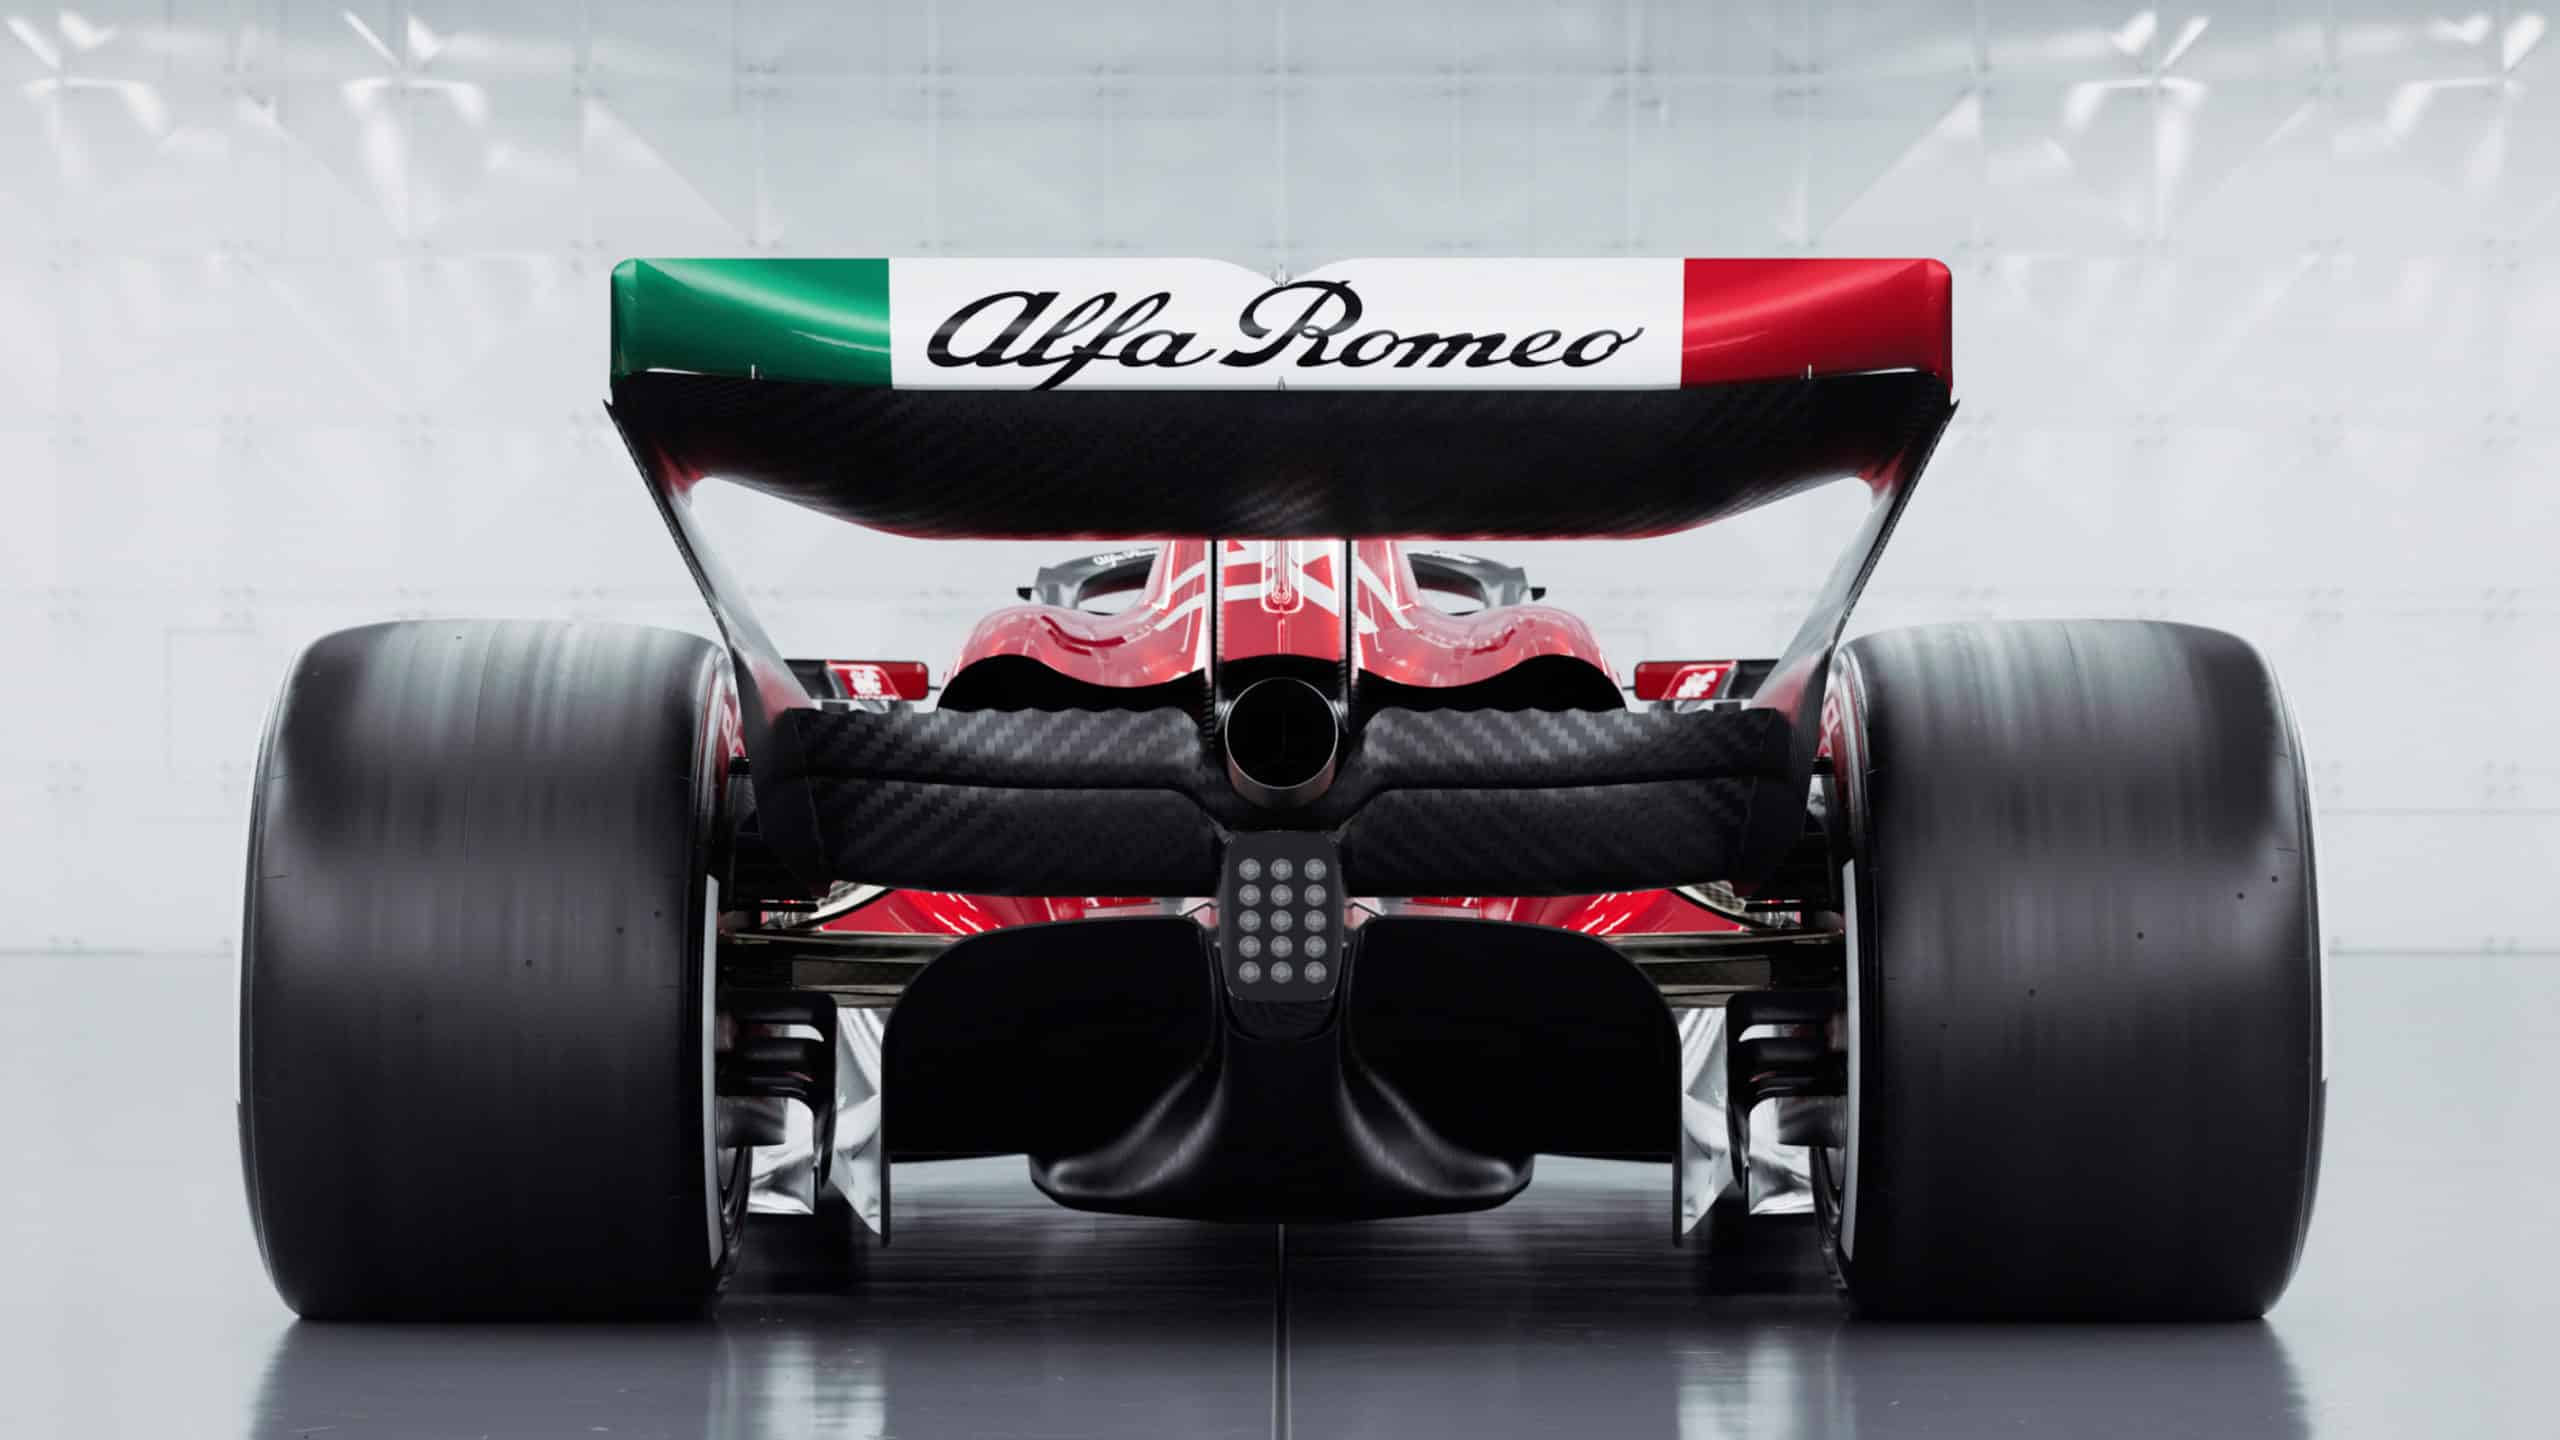 2023 Alfa Romeo rear wing